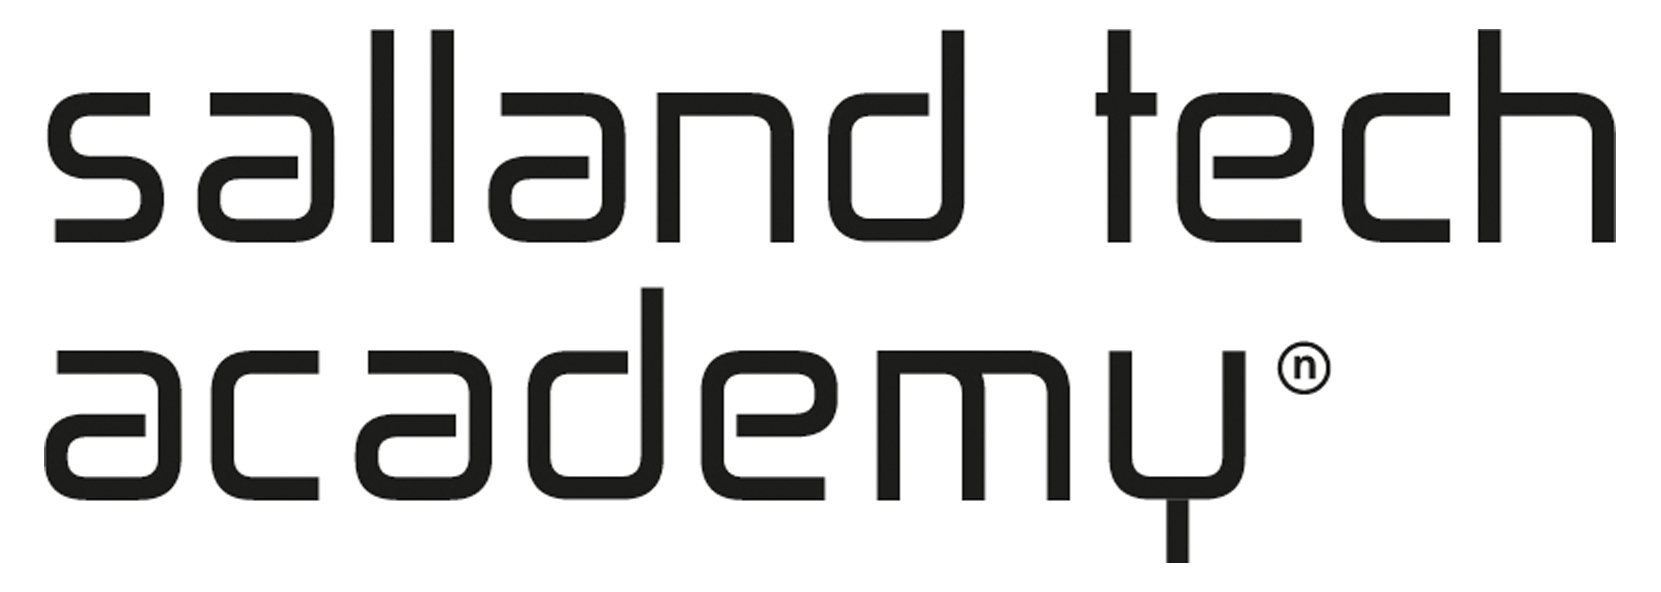 Salland Tech Academy